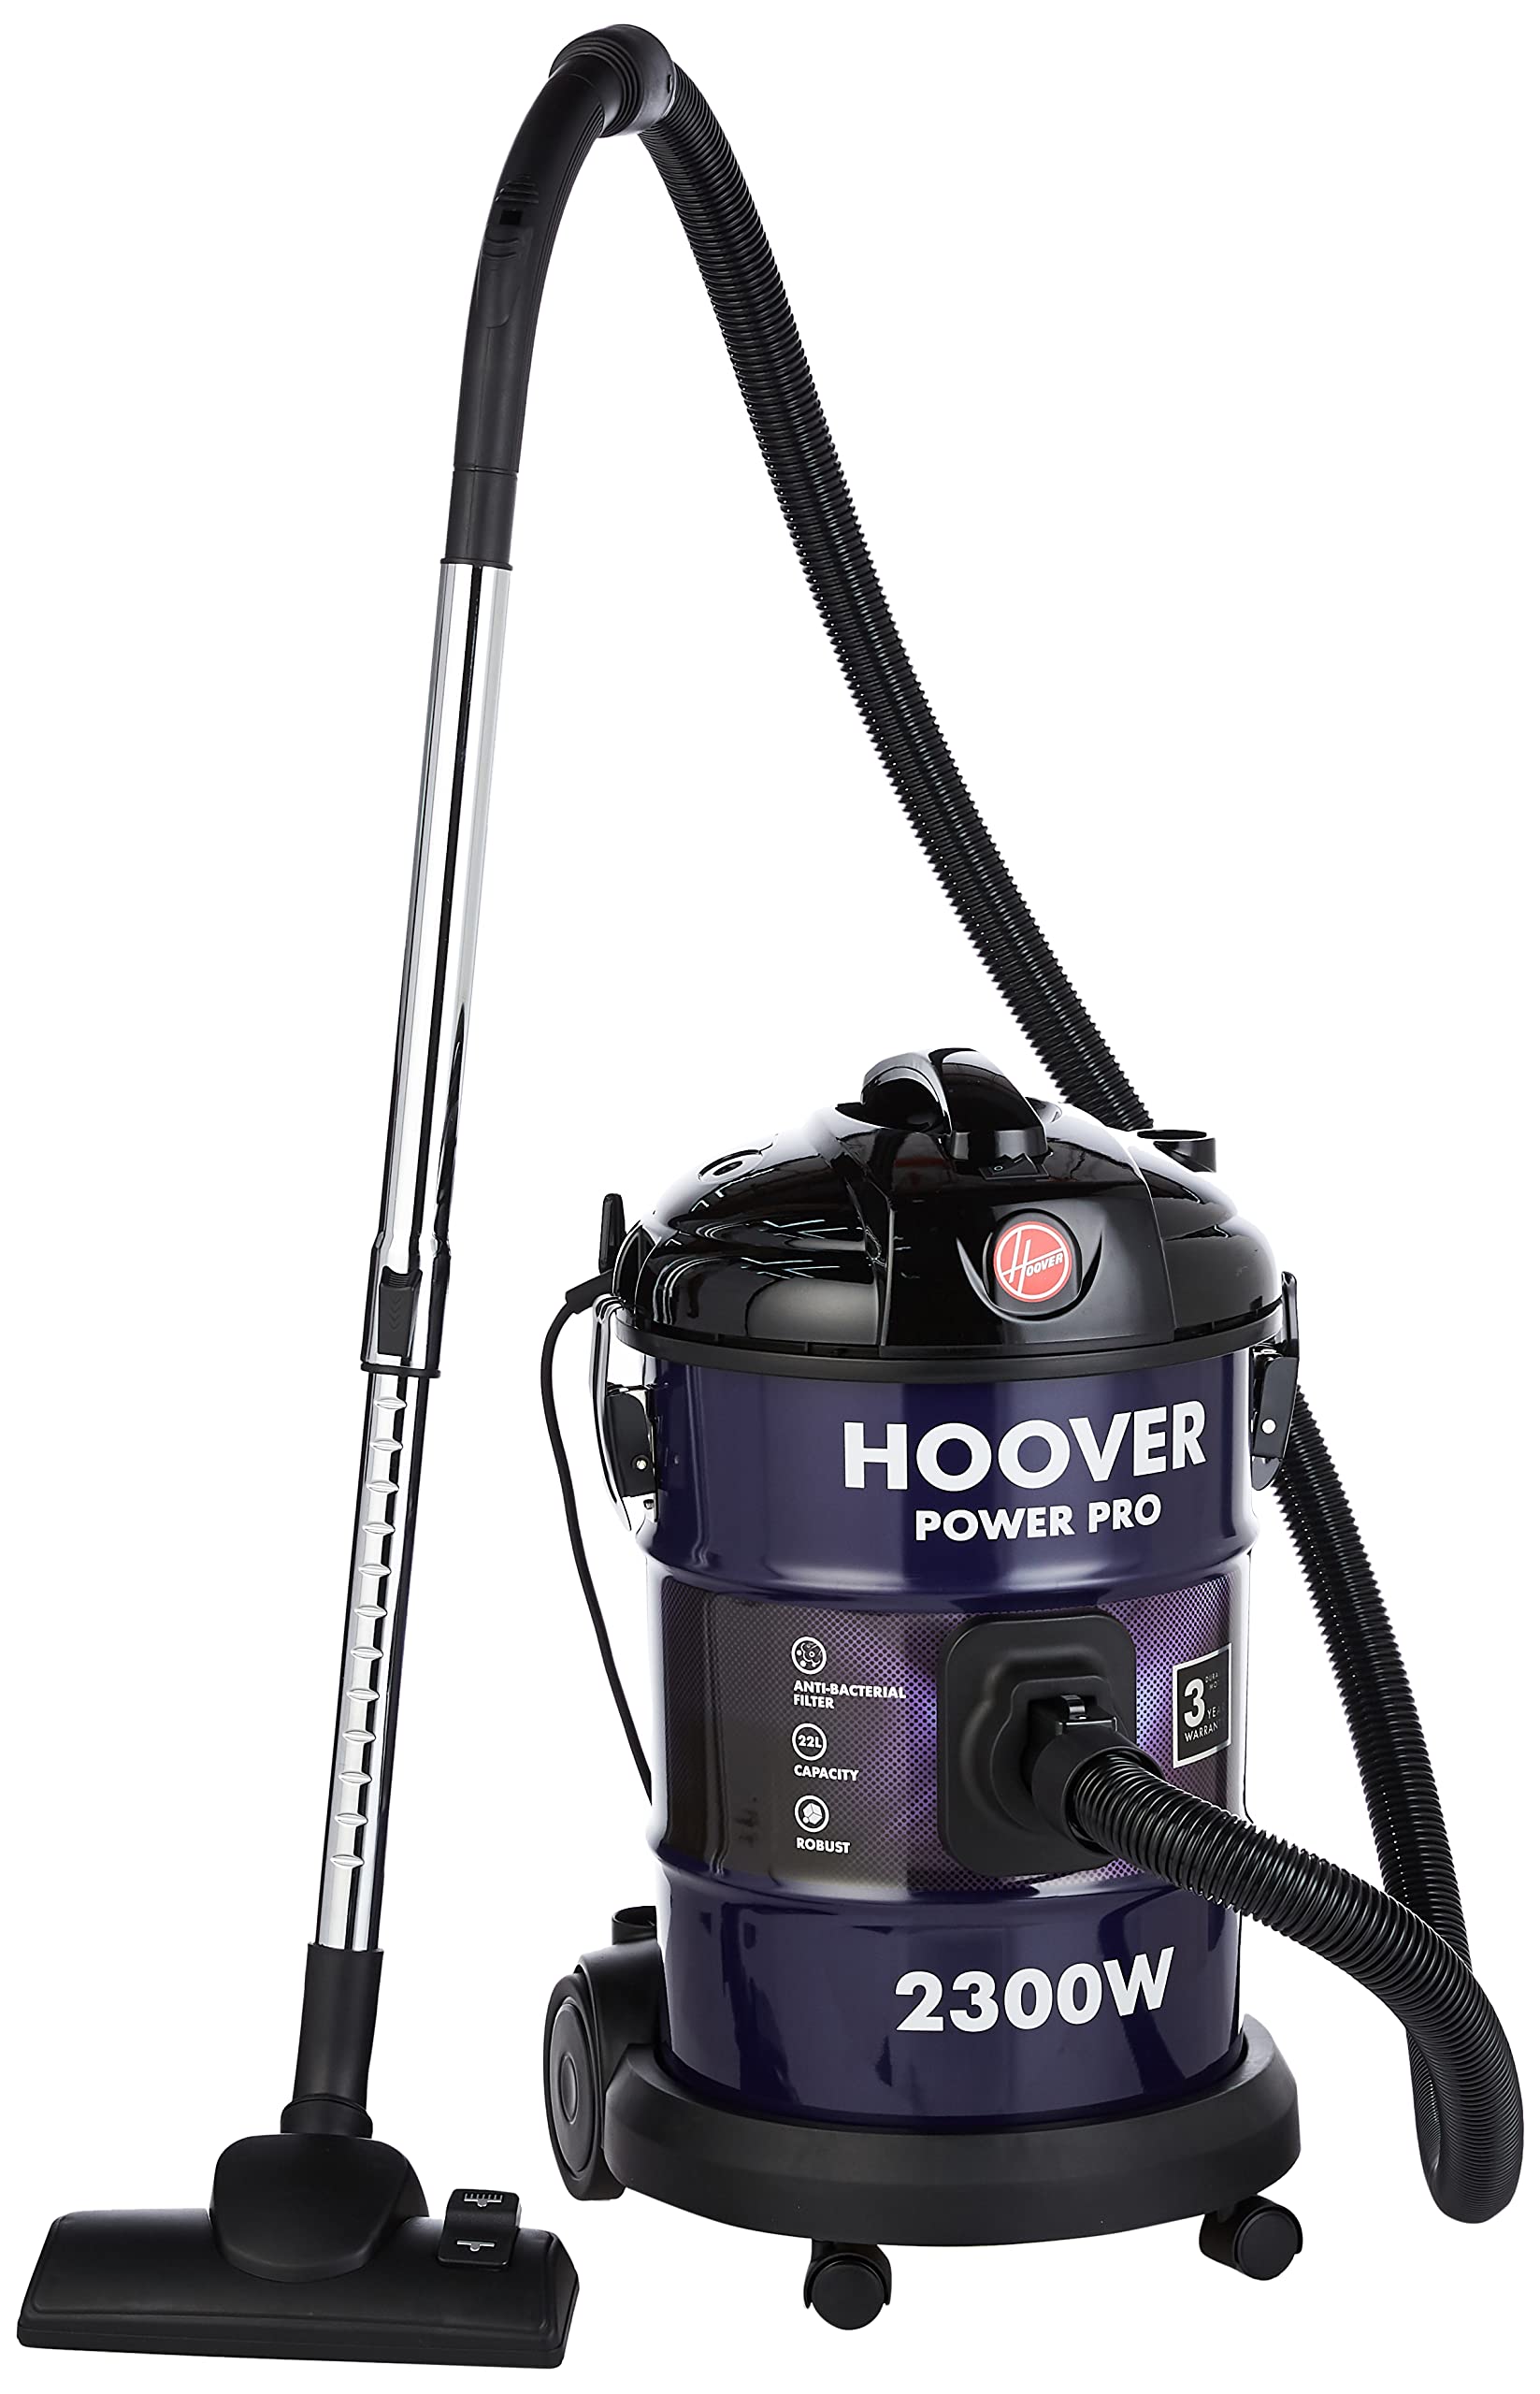 Hoover Power Pro Drum Vacuum Cleaner 22 Litre XL Large Capacity, 2300W مكنسة كهربائية هوفر 2300 واط باور برو تانك - ارجواني